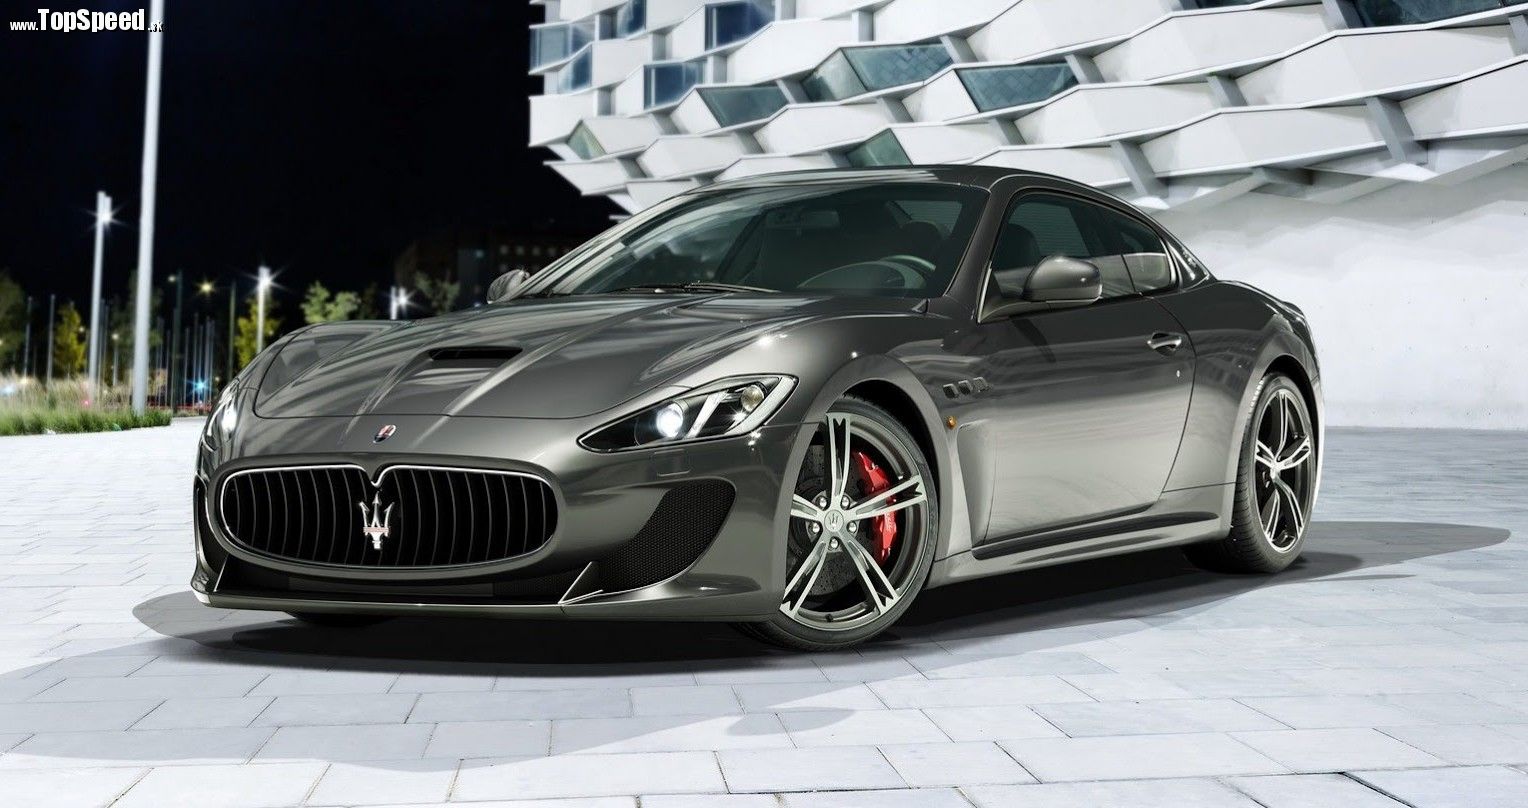 Vpredu Maserati pridalo novú karbónovú kapotu. Možno kvôli hmotnosti.